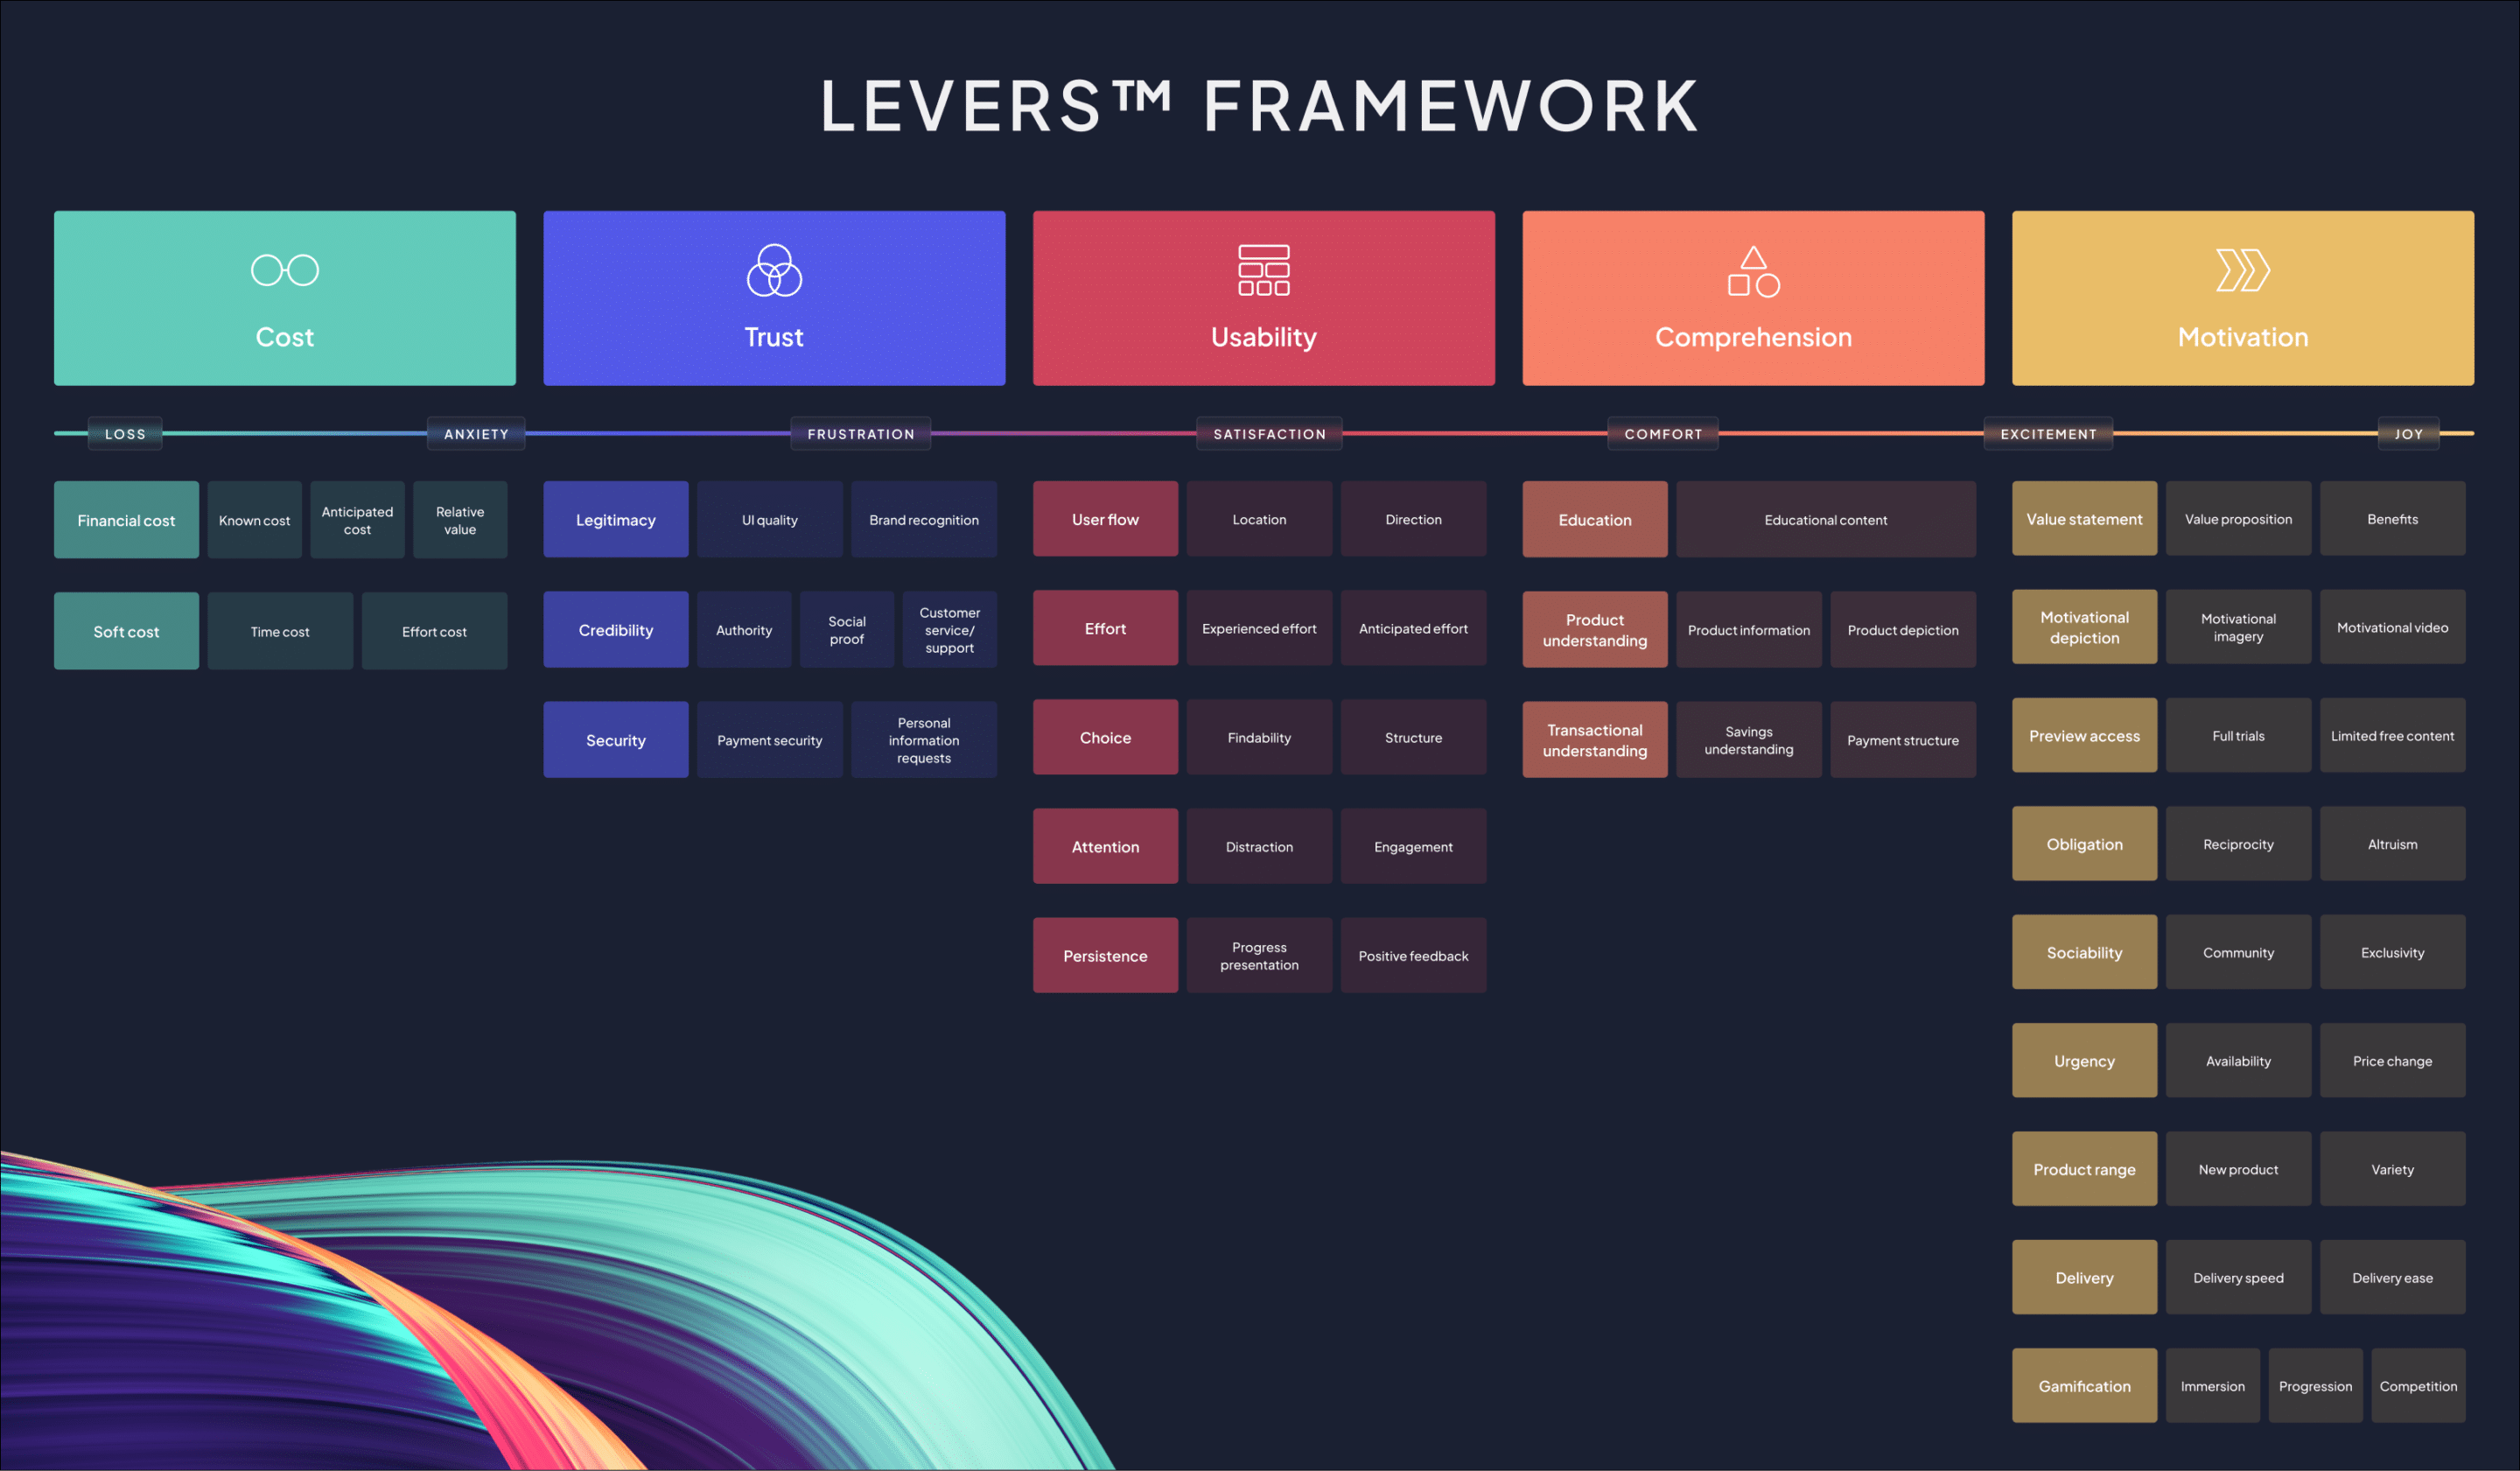 Levers Framework overview